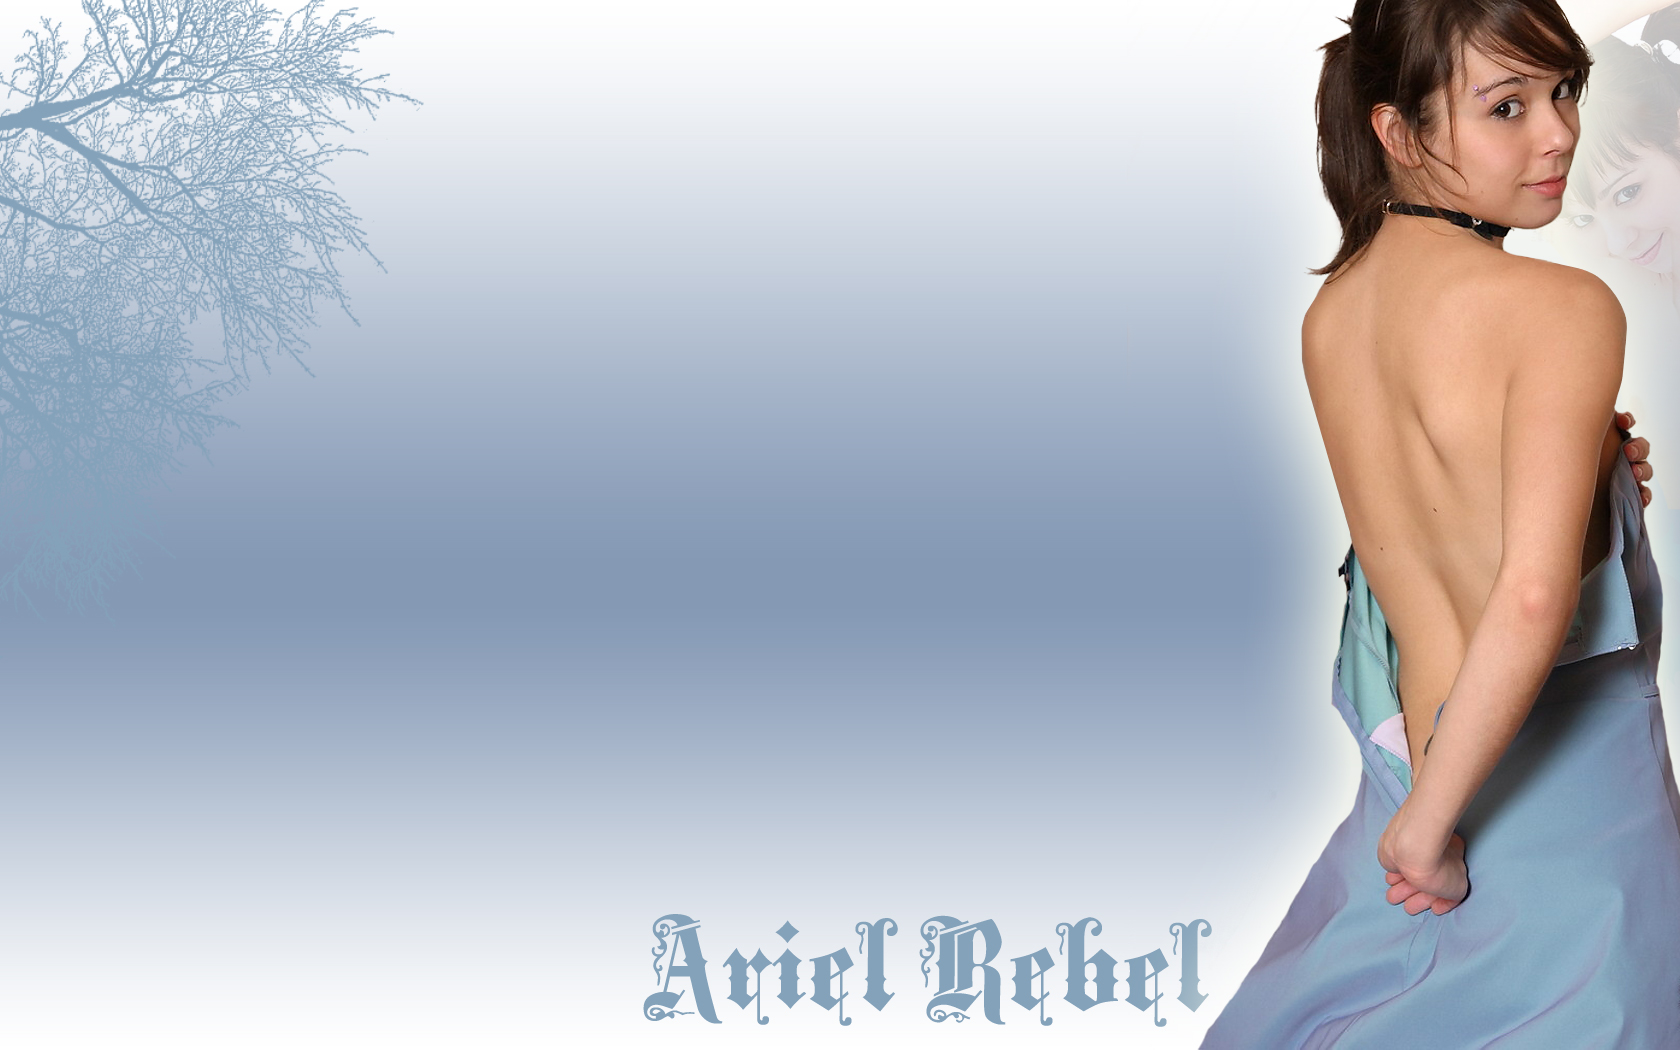 Download HQ Ariel Rebel Ariel Rebel wallpaper / 1680x1050